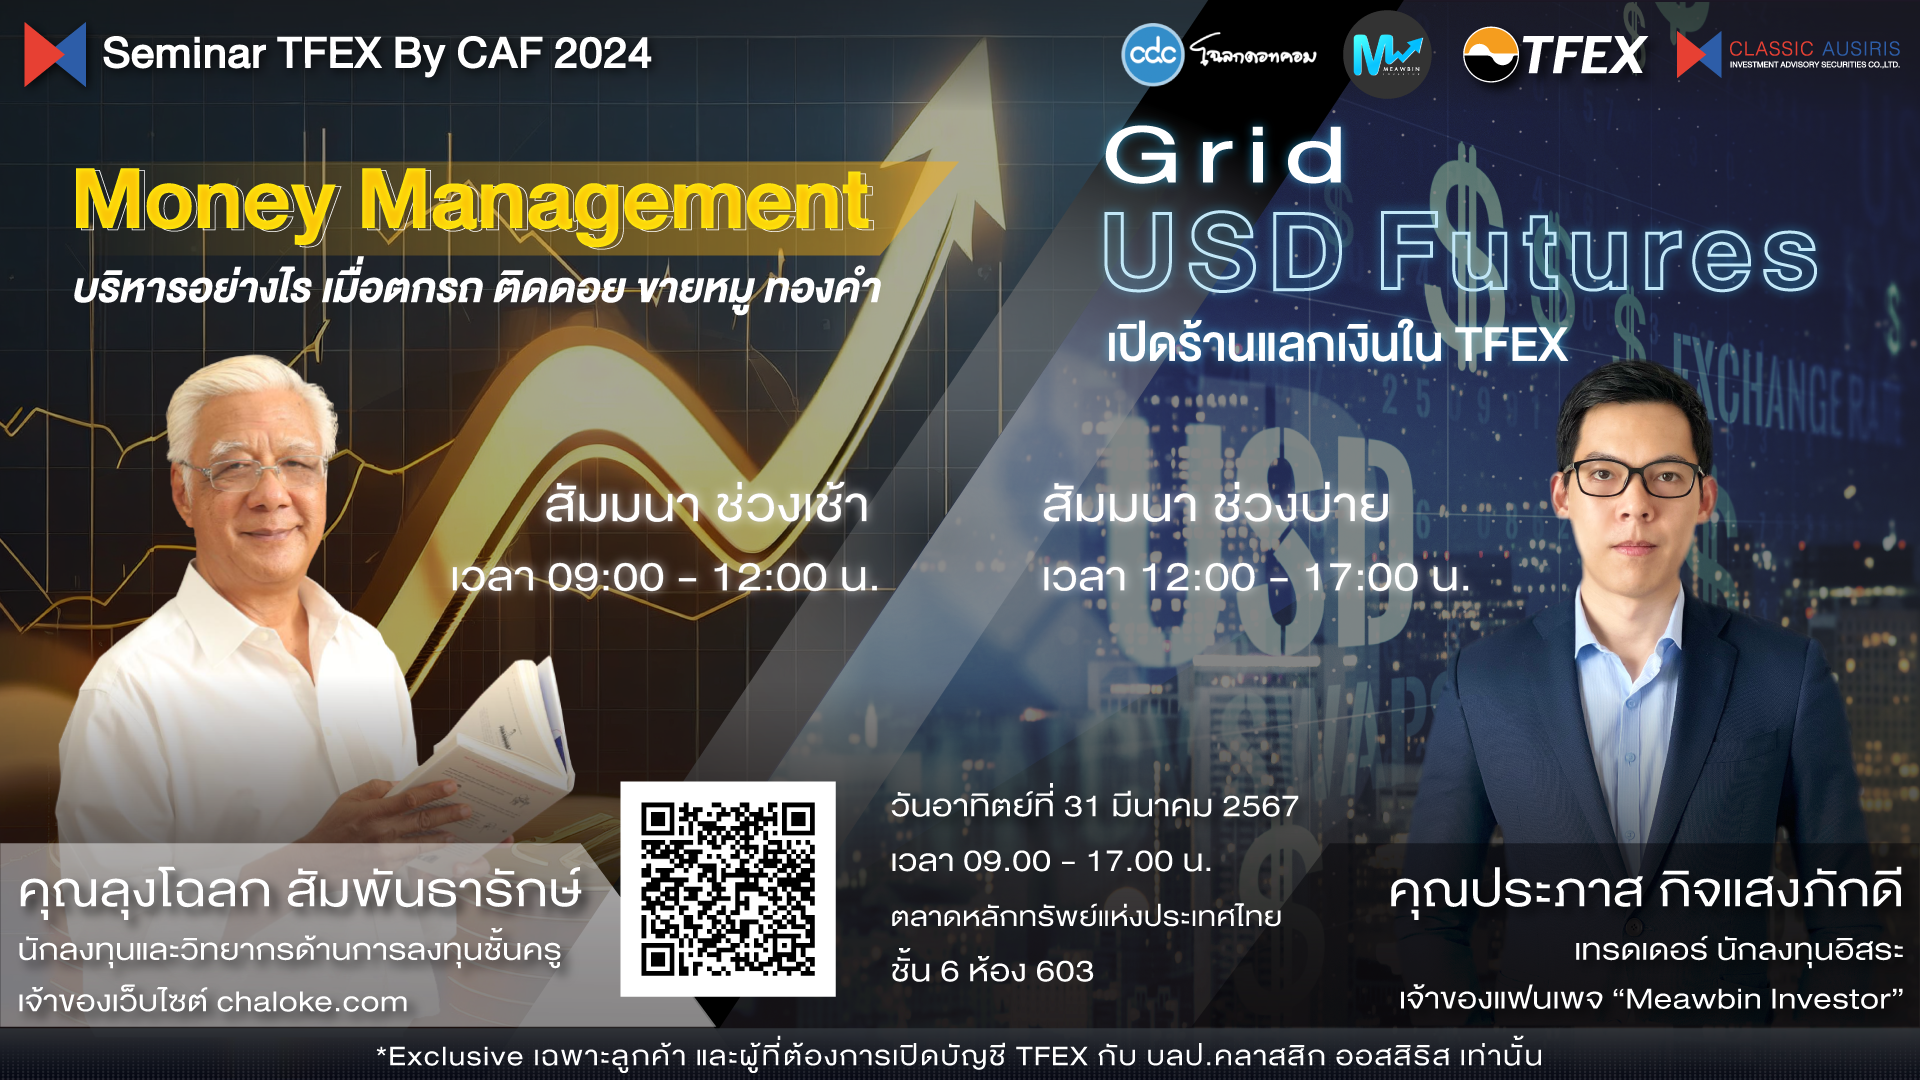 Money Management / Grid USD Futures 